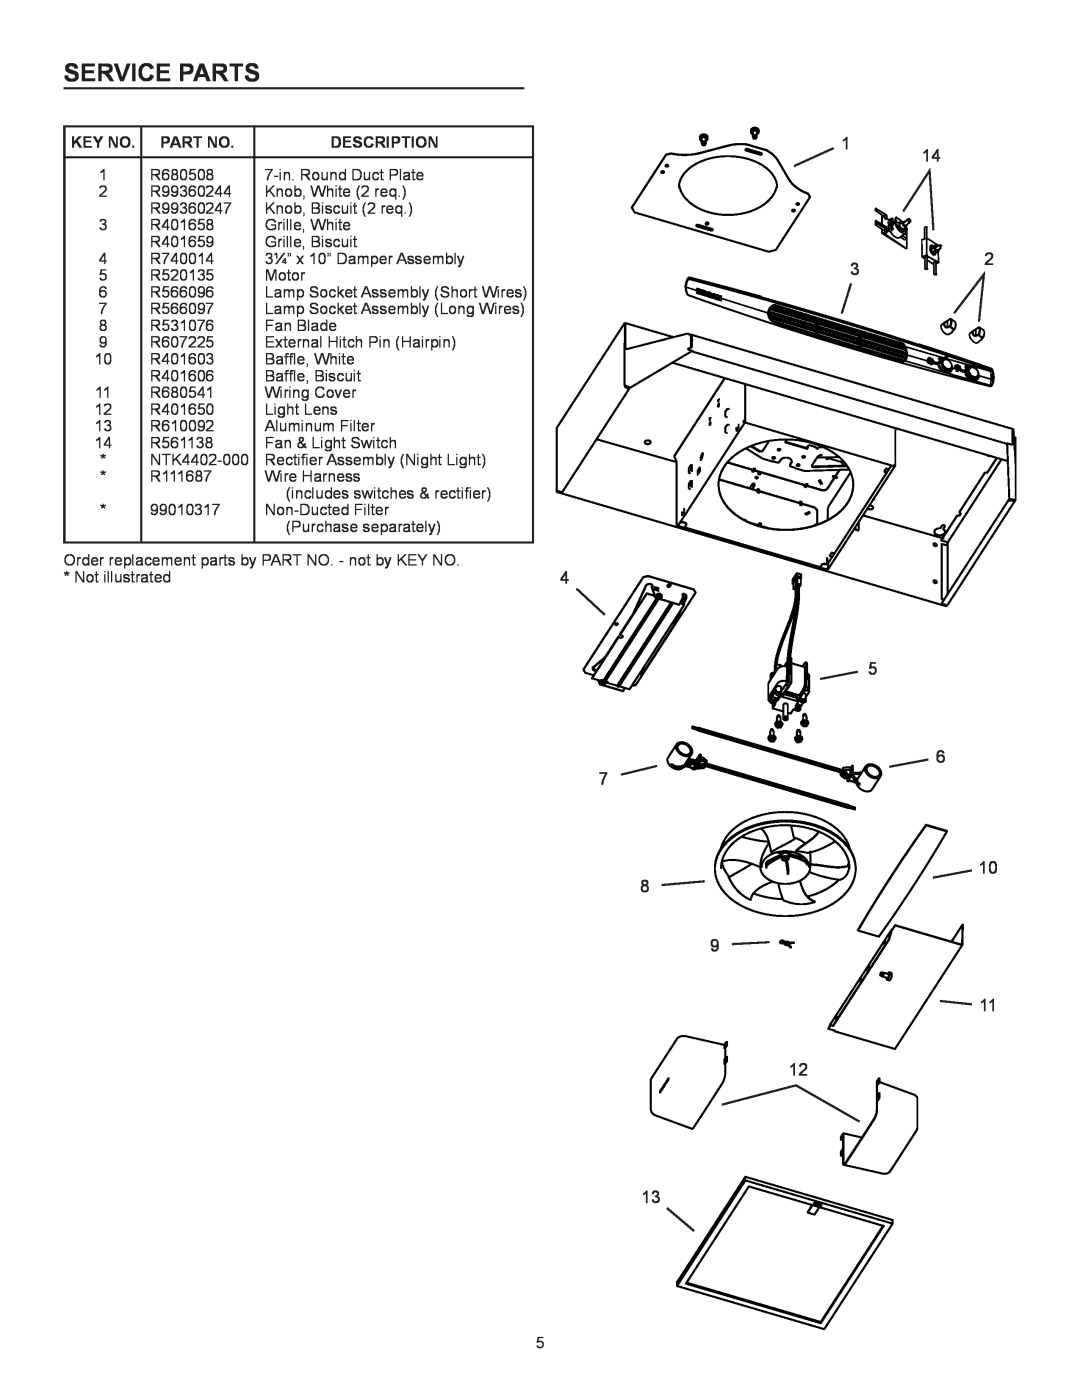 Broan Ql100 Series installation instructions service parts, descriPTION 